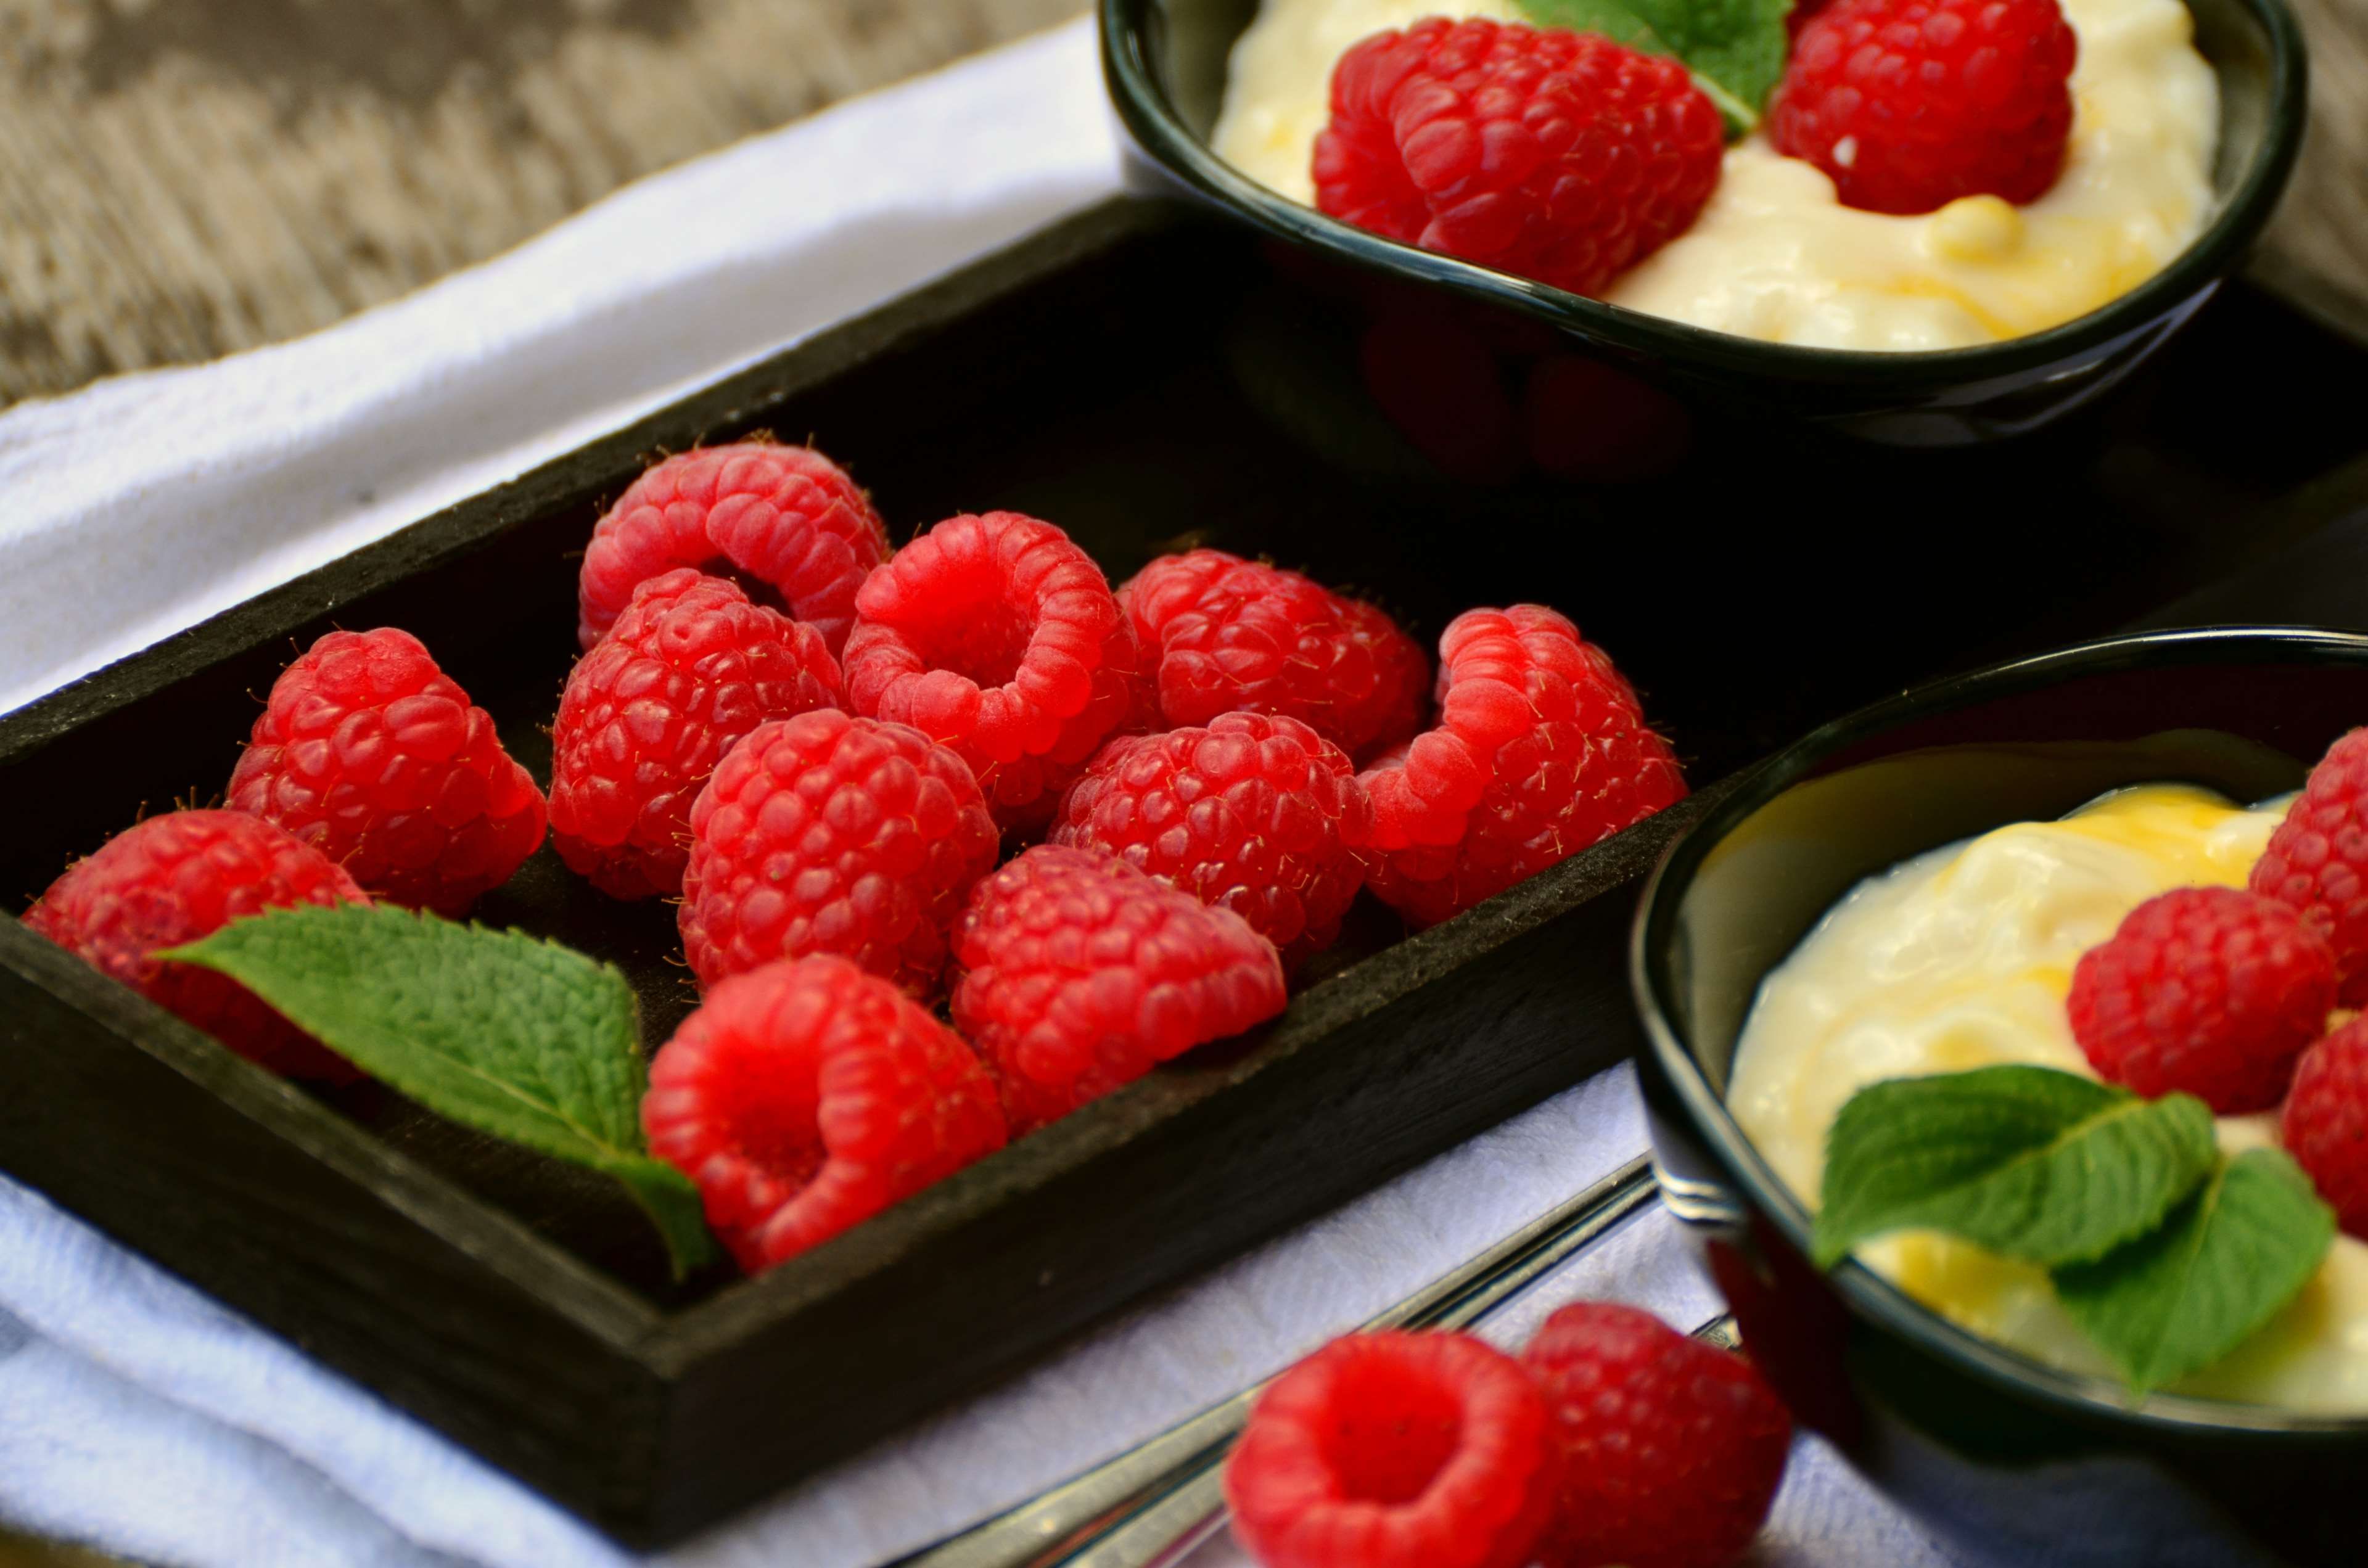 berries #frisch #fruits #pudding #raspberries #red #ripe #still life ...